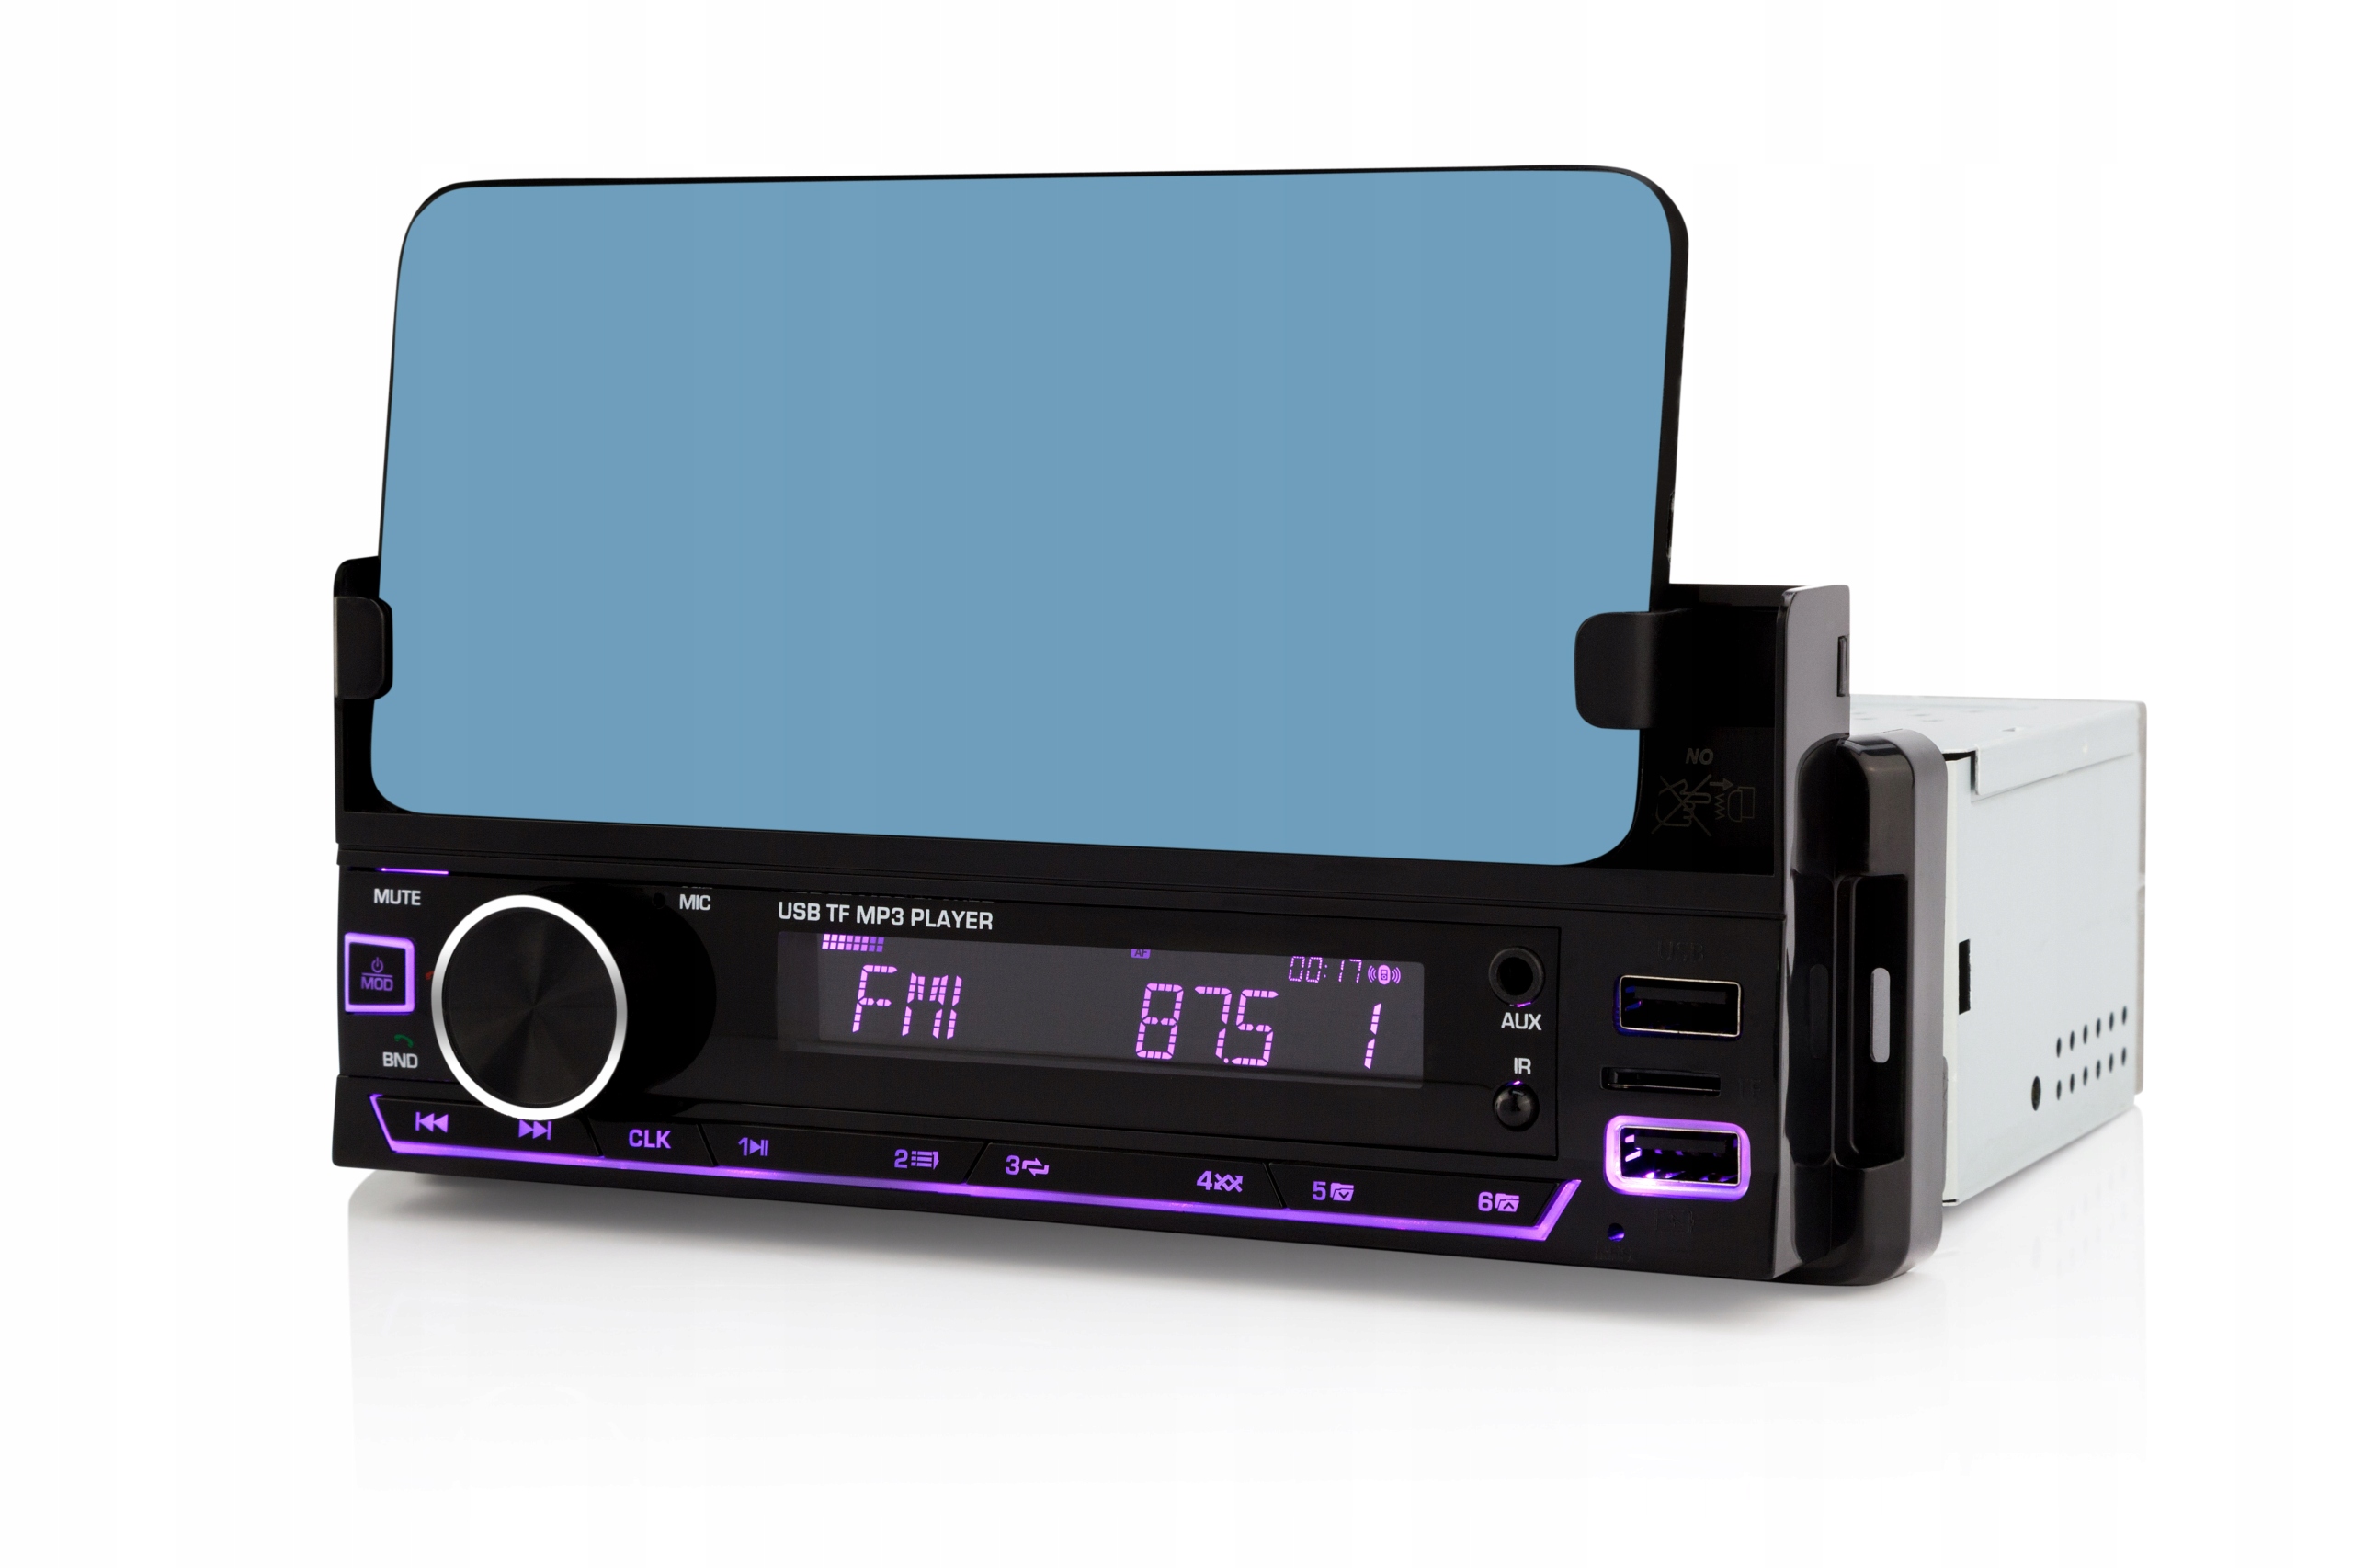 Vordon HT-230 Lincoln Bluetooth avtoradio z držalom za telefon znamke Vordon